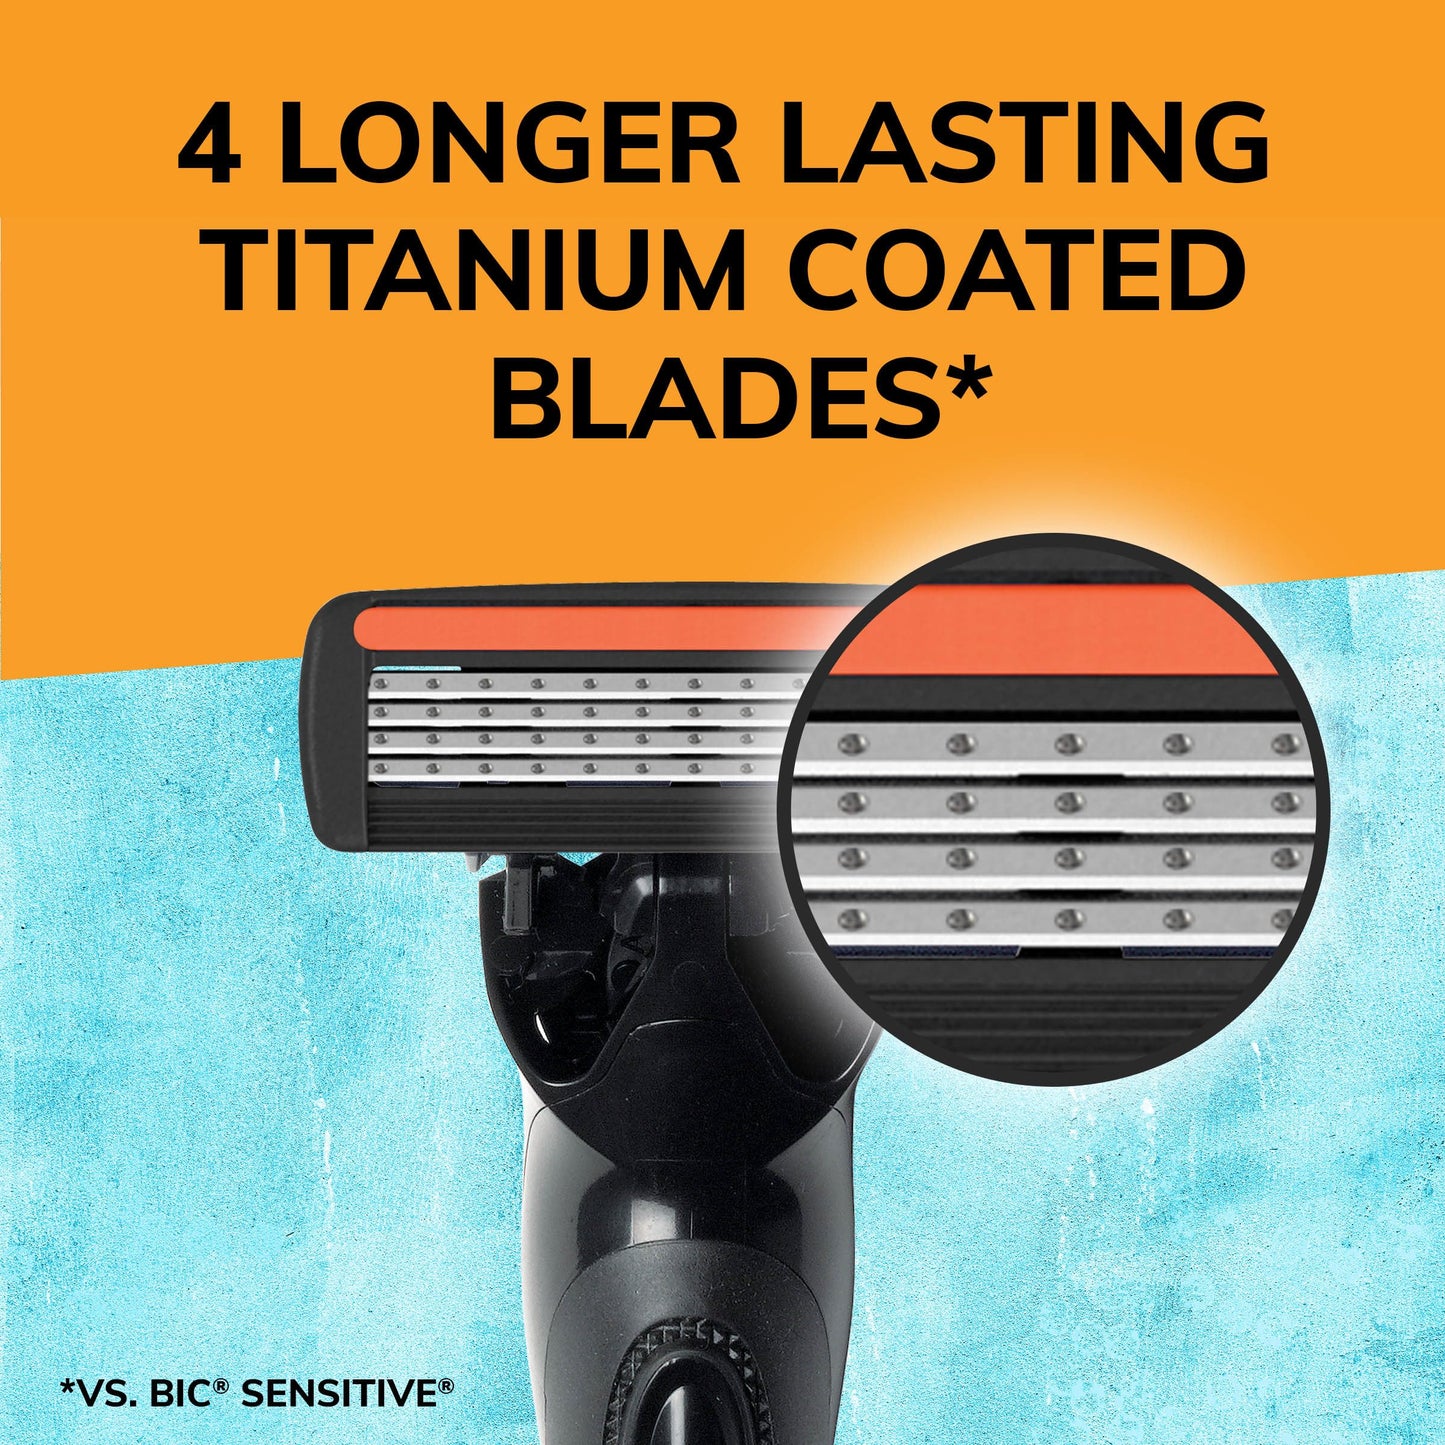 BIC Flex 4 Refillable Refill Razor Cartridges for Men, Long-Lasting 4 Blade Razor Heads for Sensitive Skin, 10 Refill Cartridges